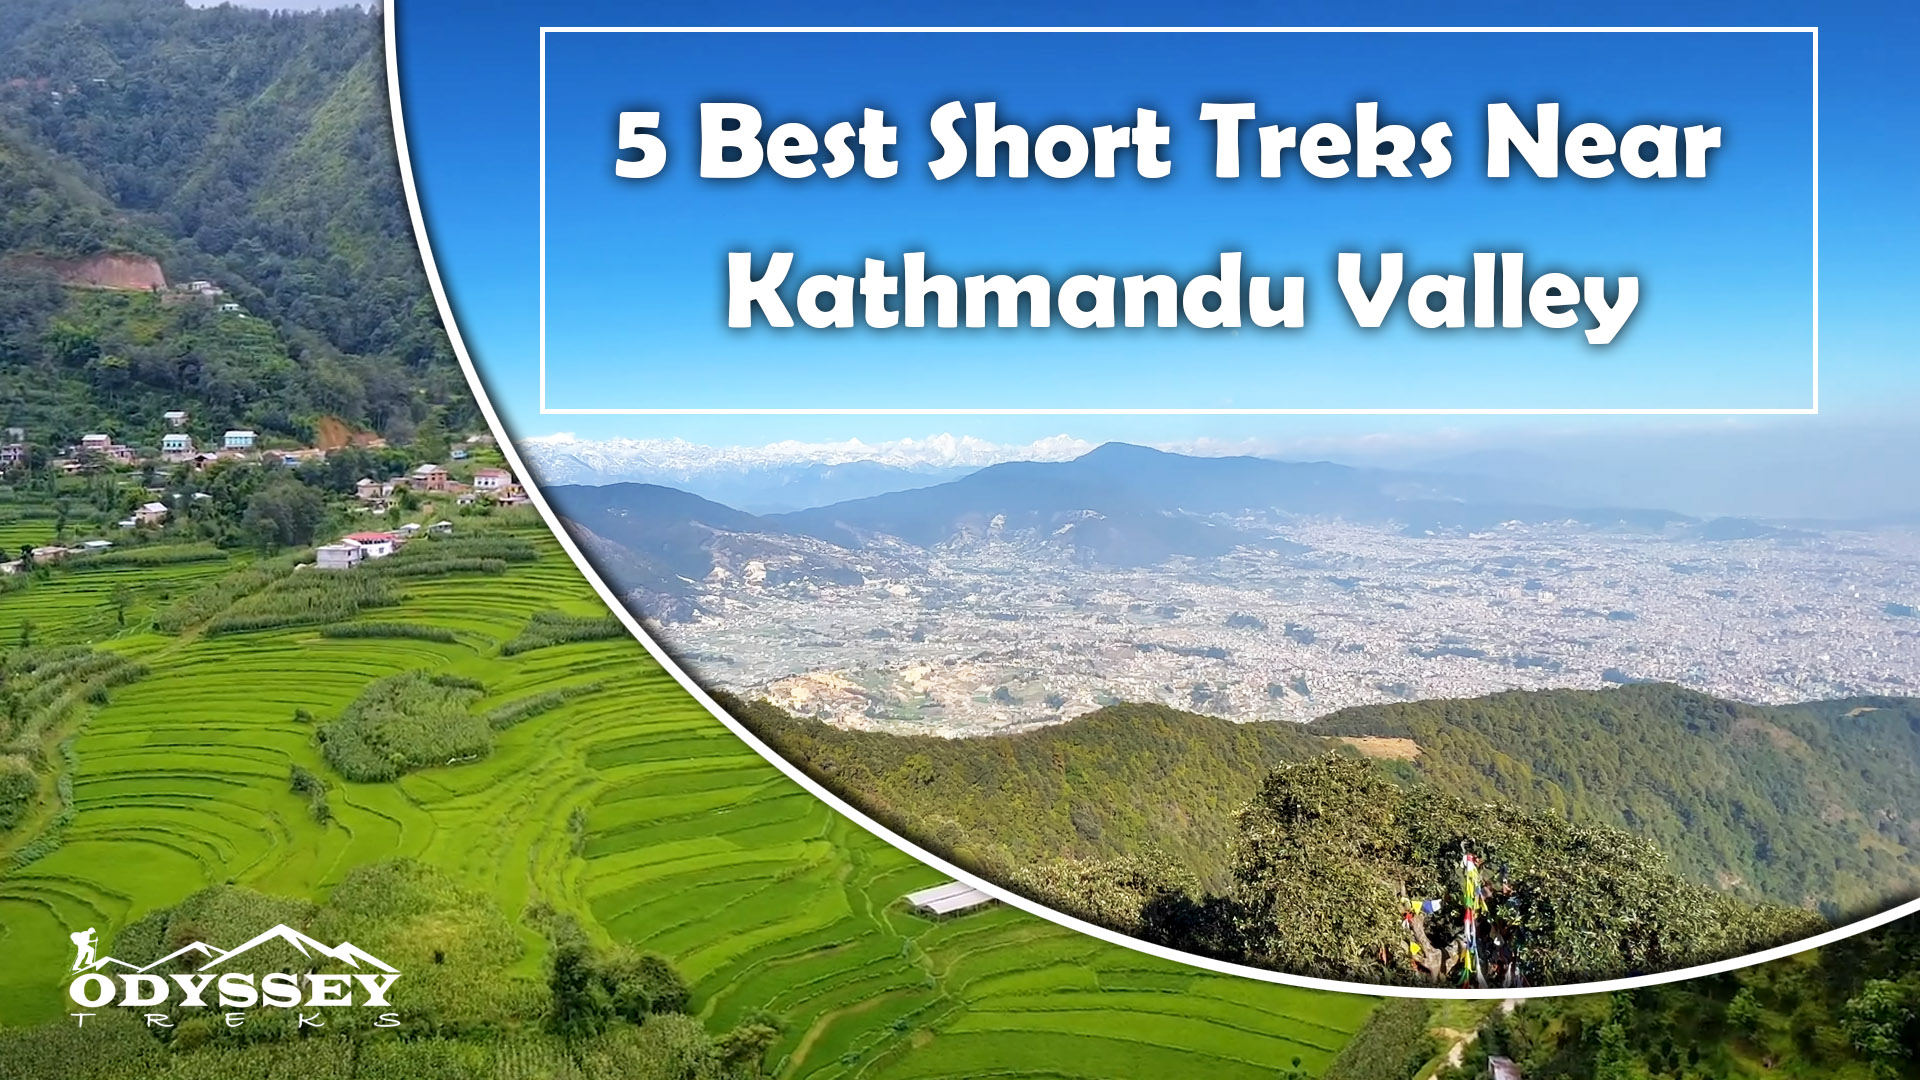 5 Best Short Treks Near Kathmandu Valley